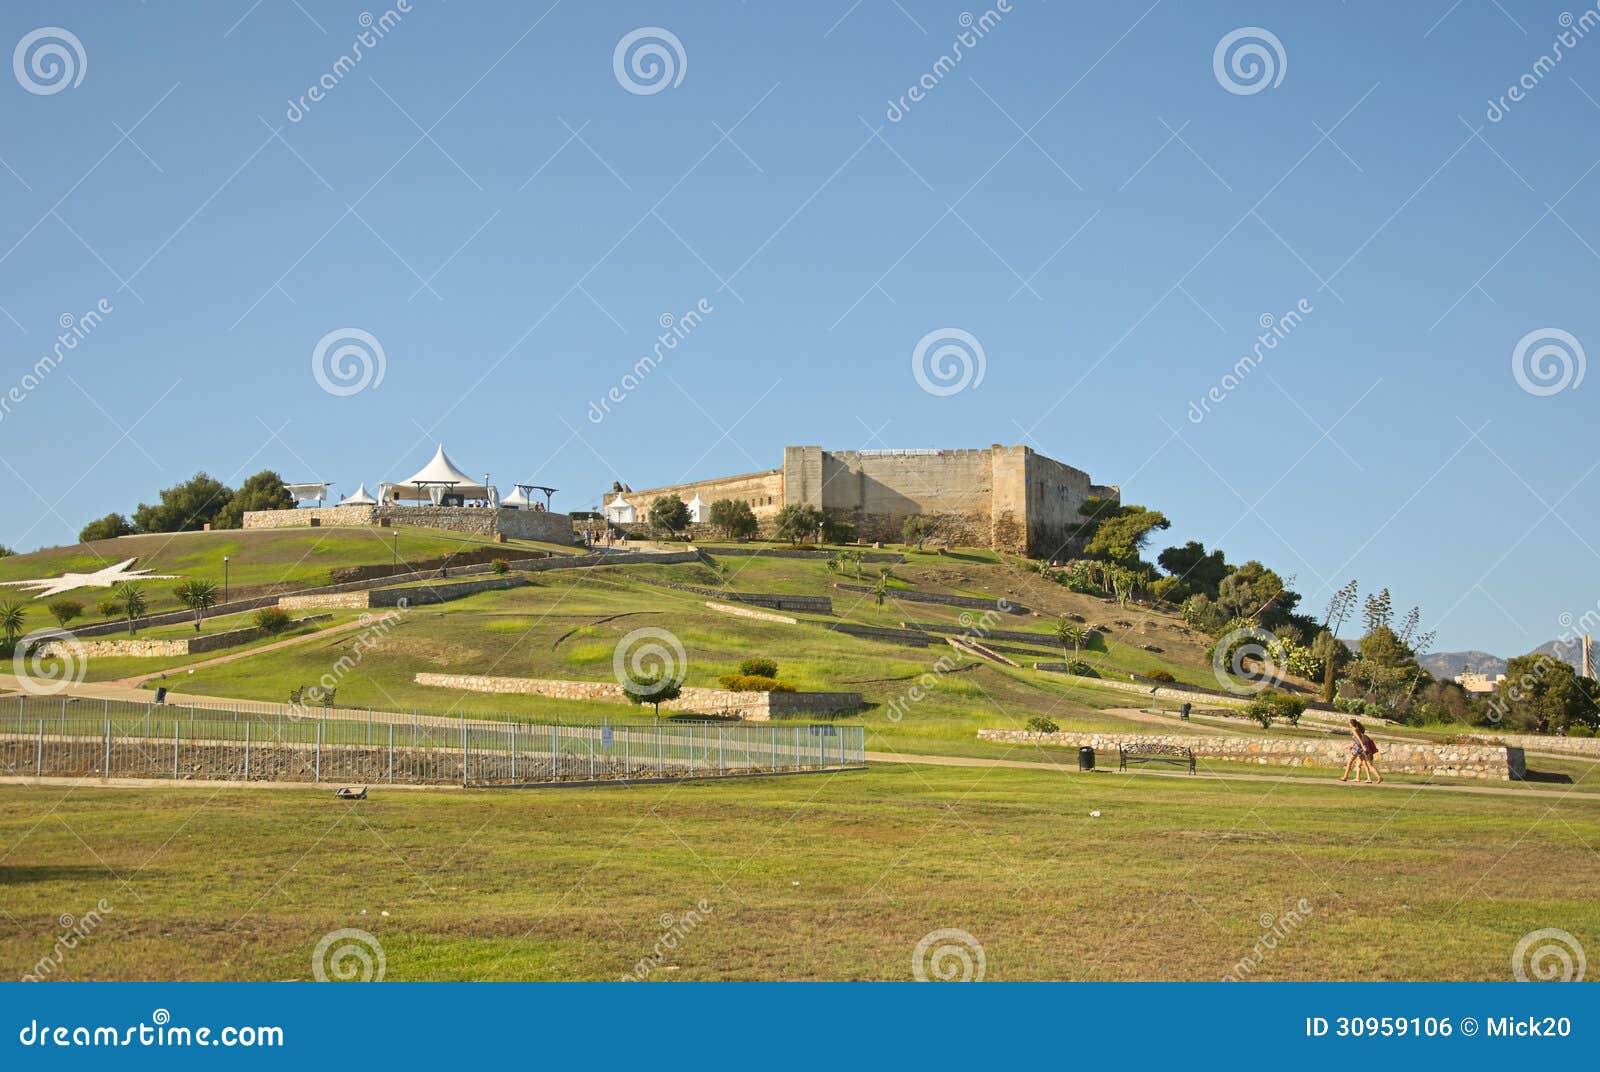 castillo sohail in fuengirola, spain